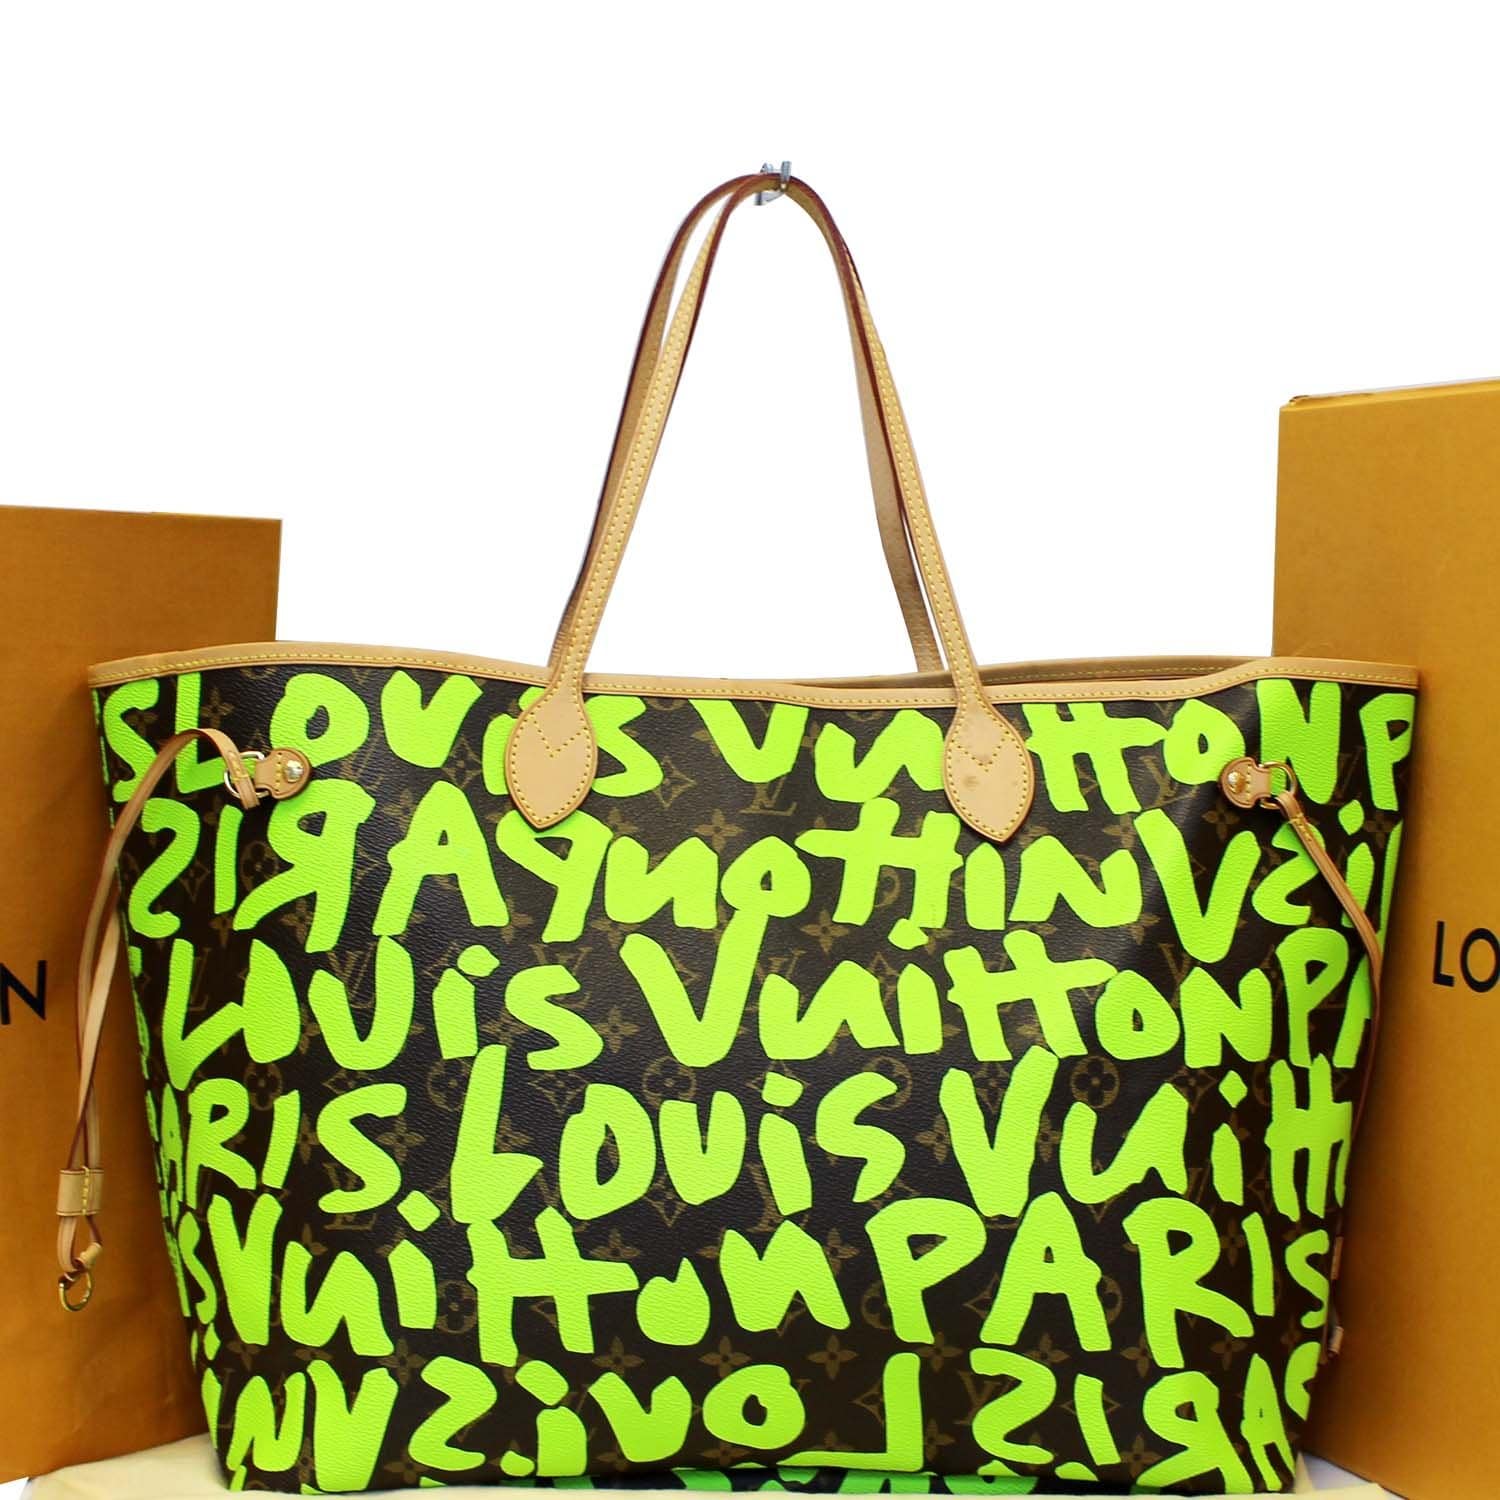 Louis Vuitton graffiti bag charm Green Gold hardware Gold-plated